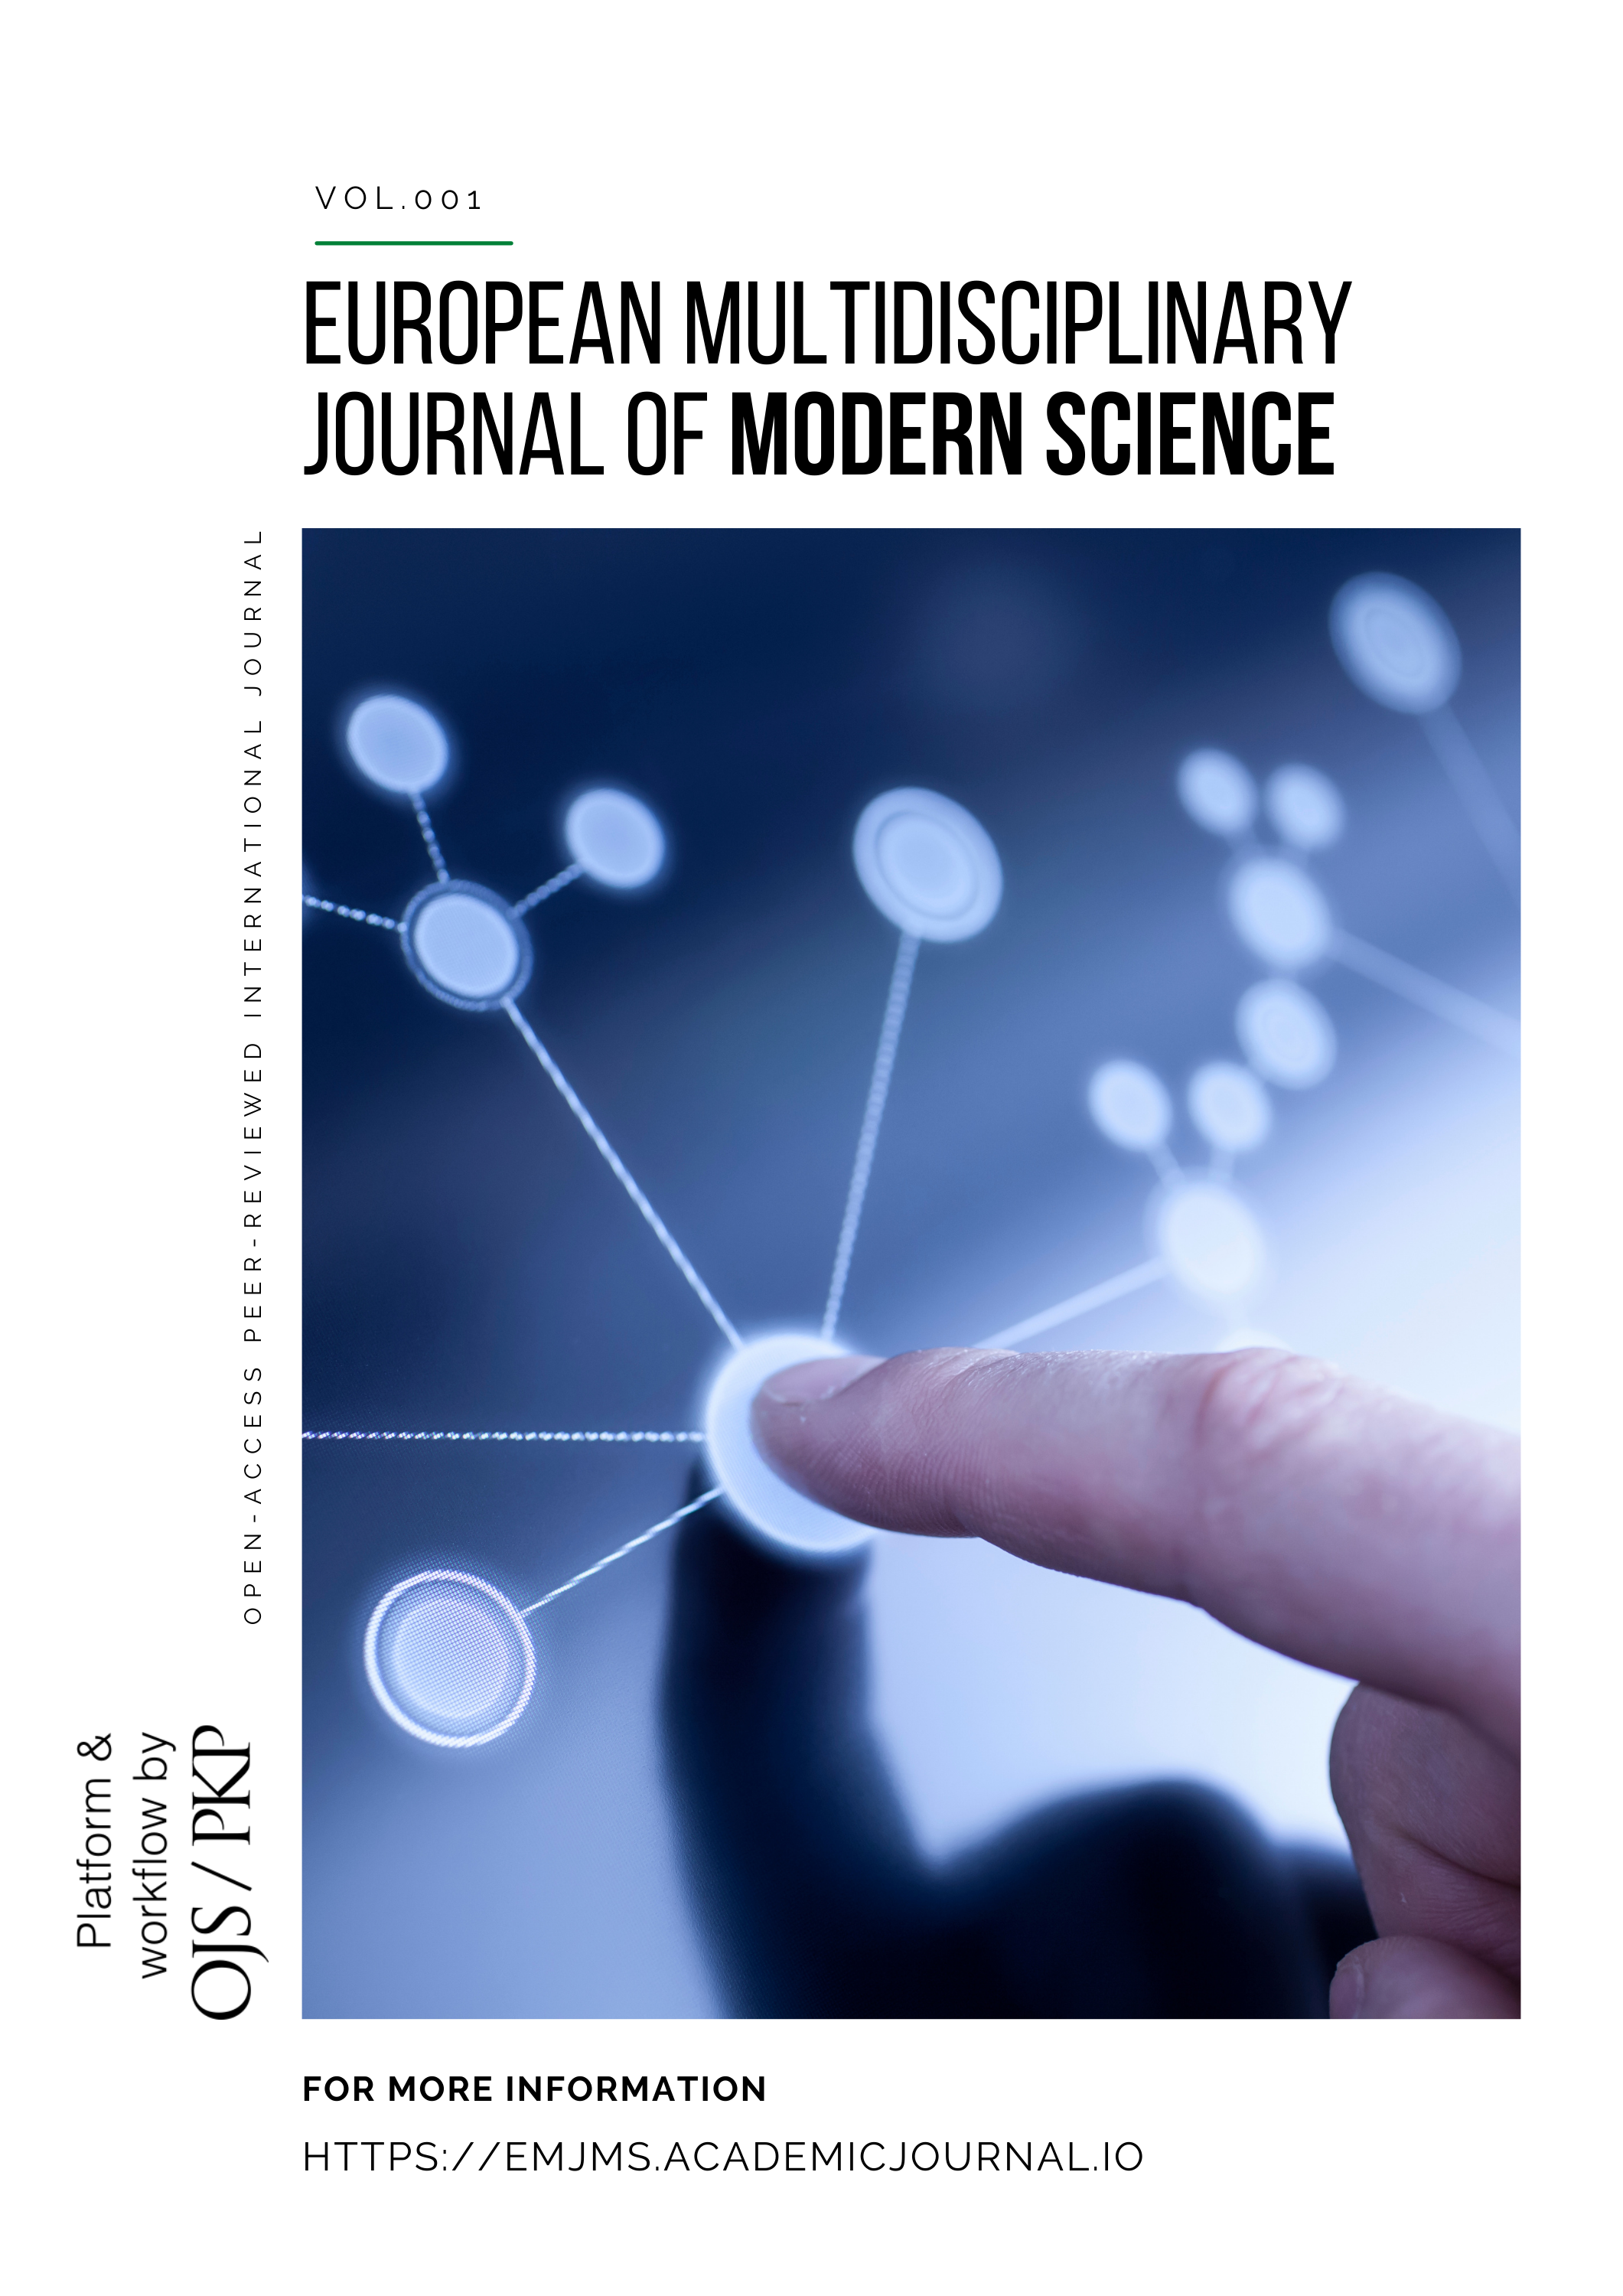                         View Vol. 1 (2021): European Multidisciplinary Journal of Modern Science
                    